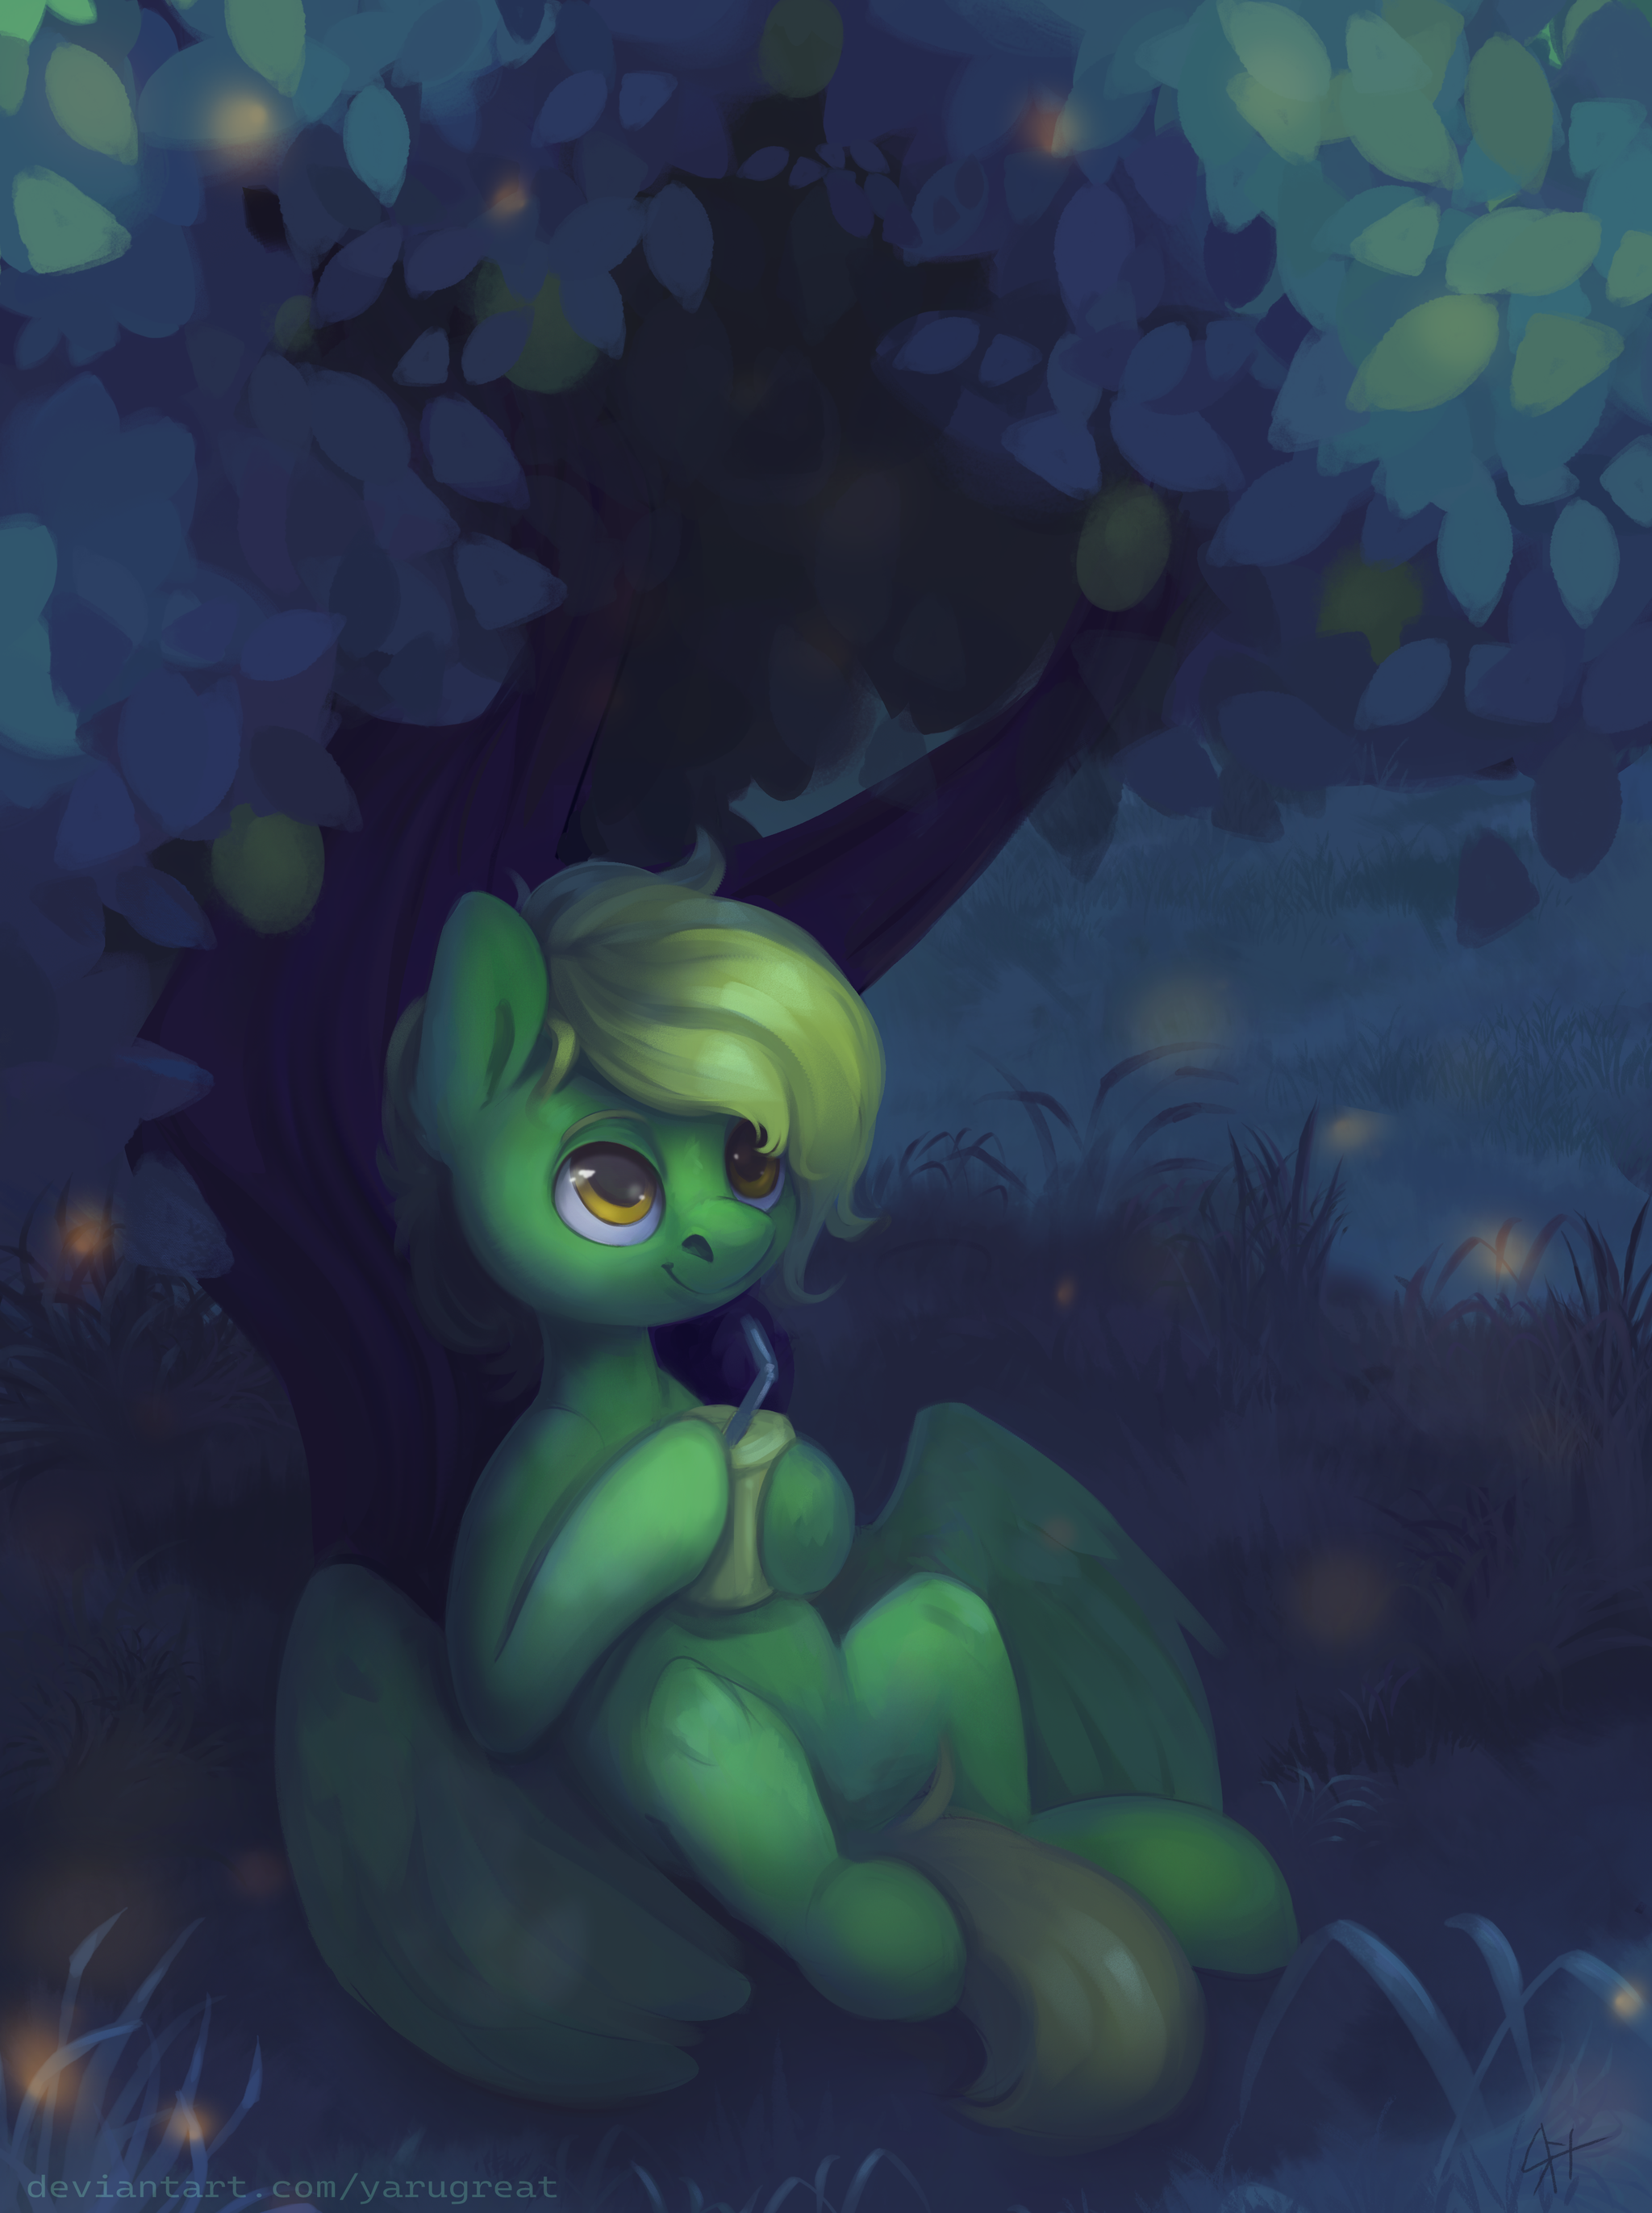 Lies under a tree - My little pony, Original character, PonyArt, Art, Yarugreat